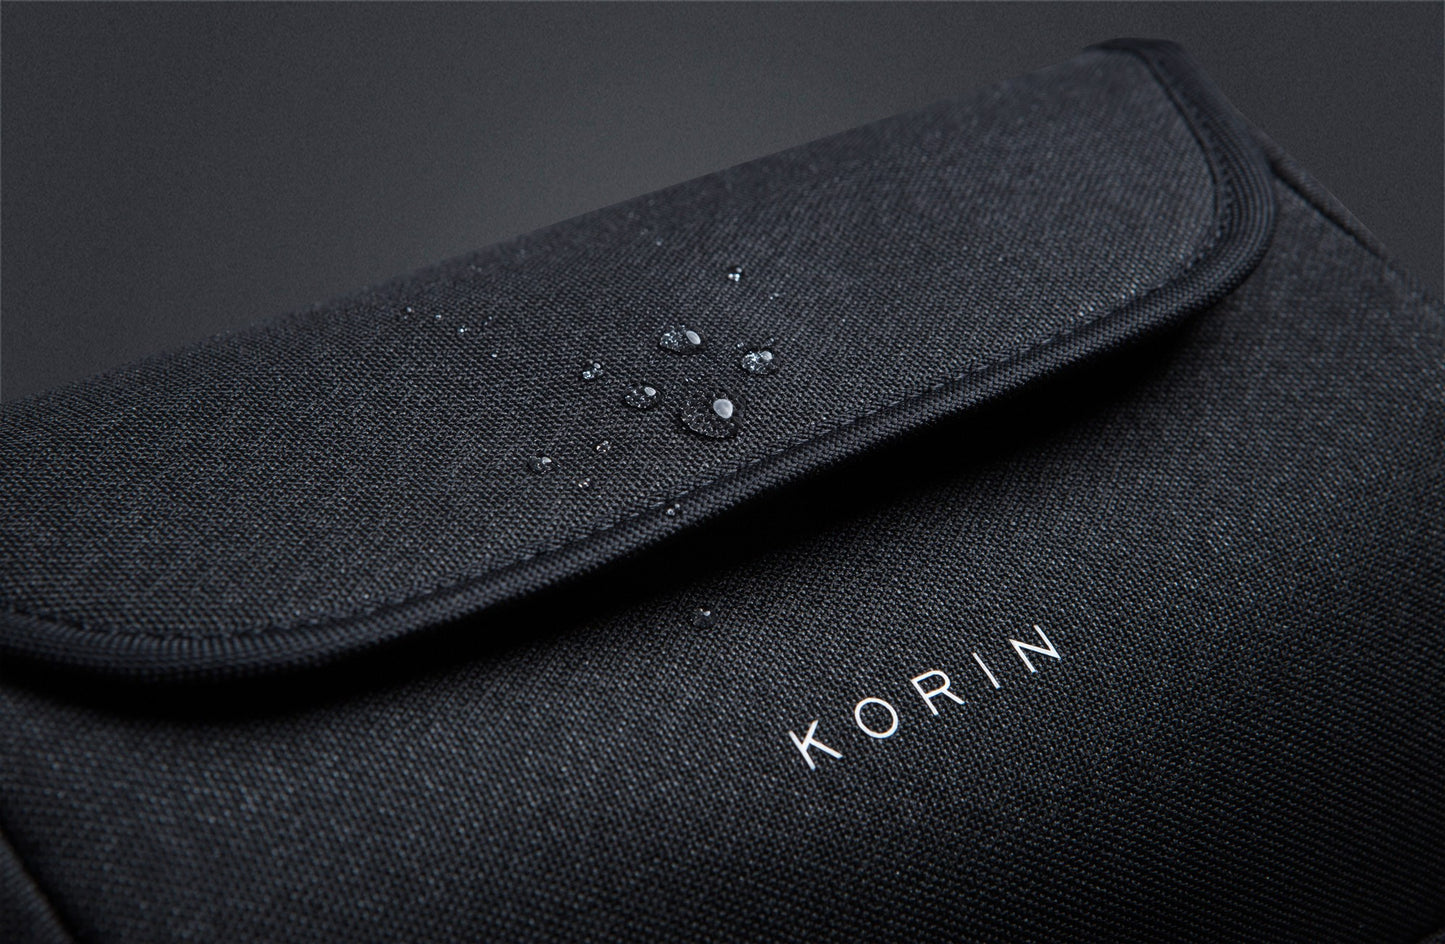 Click SLING Korin Design クリックスリング コリンデザイン ショルダーバッグ 斜めがけ